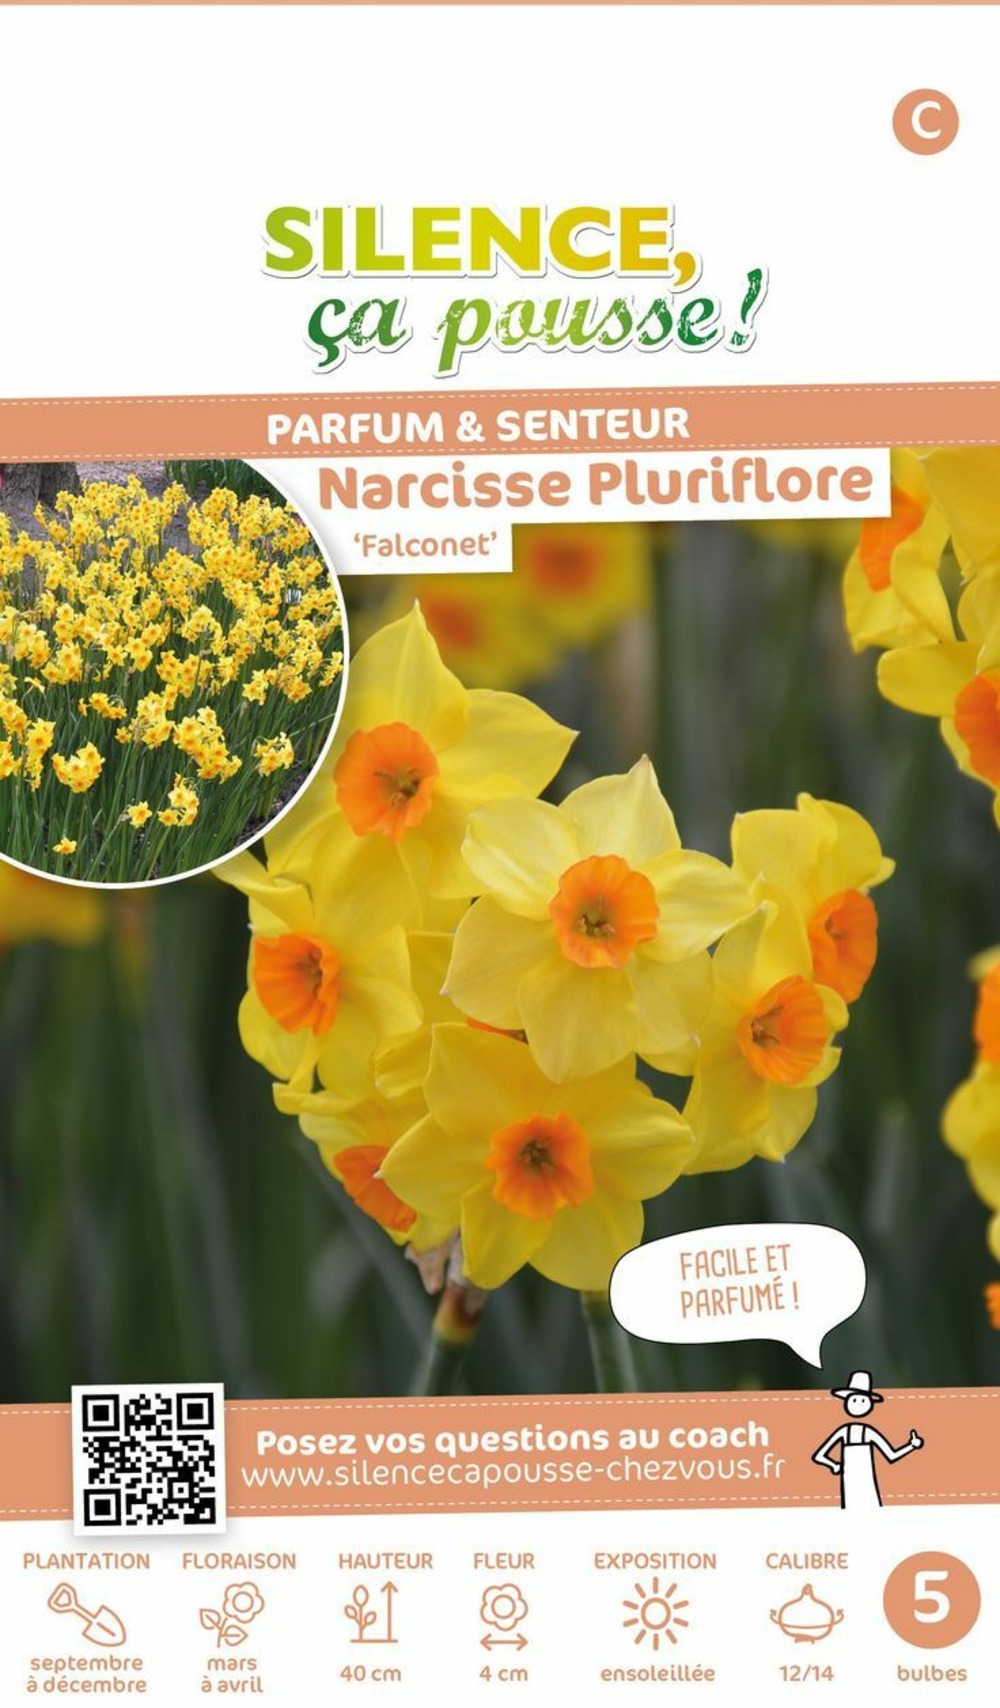 Narcisse pluriflore falconet 12/14 x5 bulbes | Truffaut